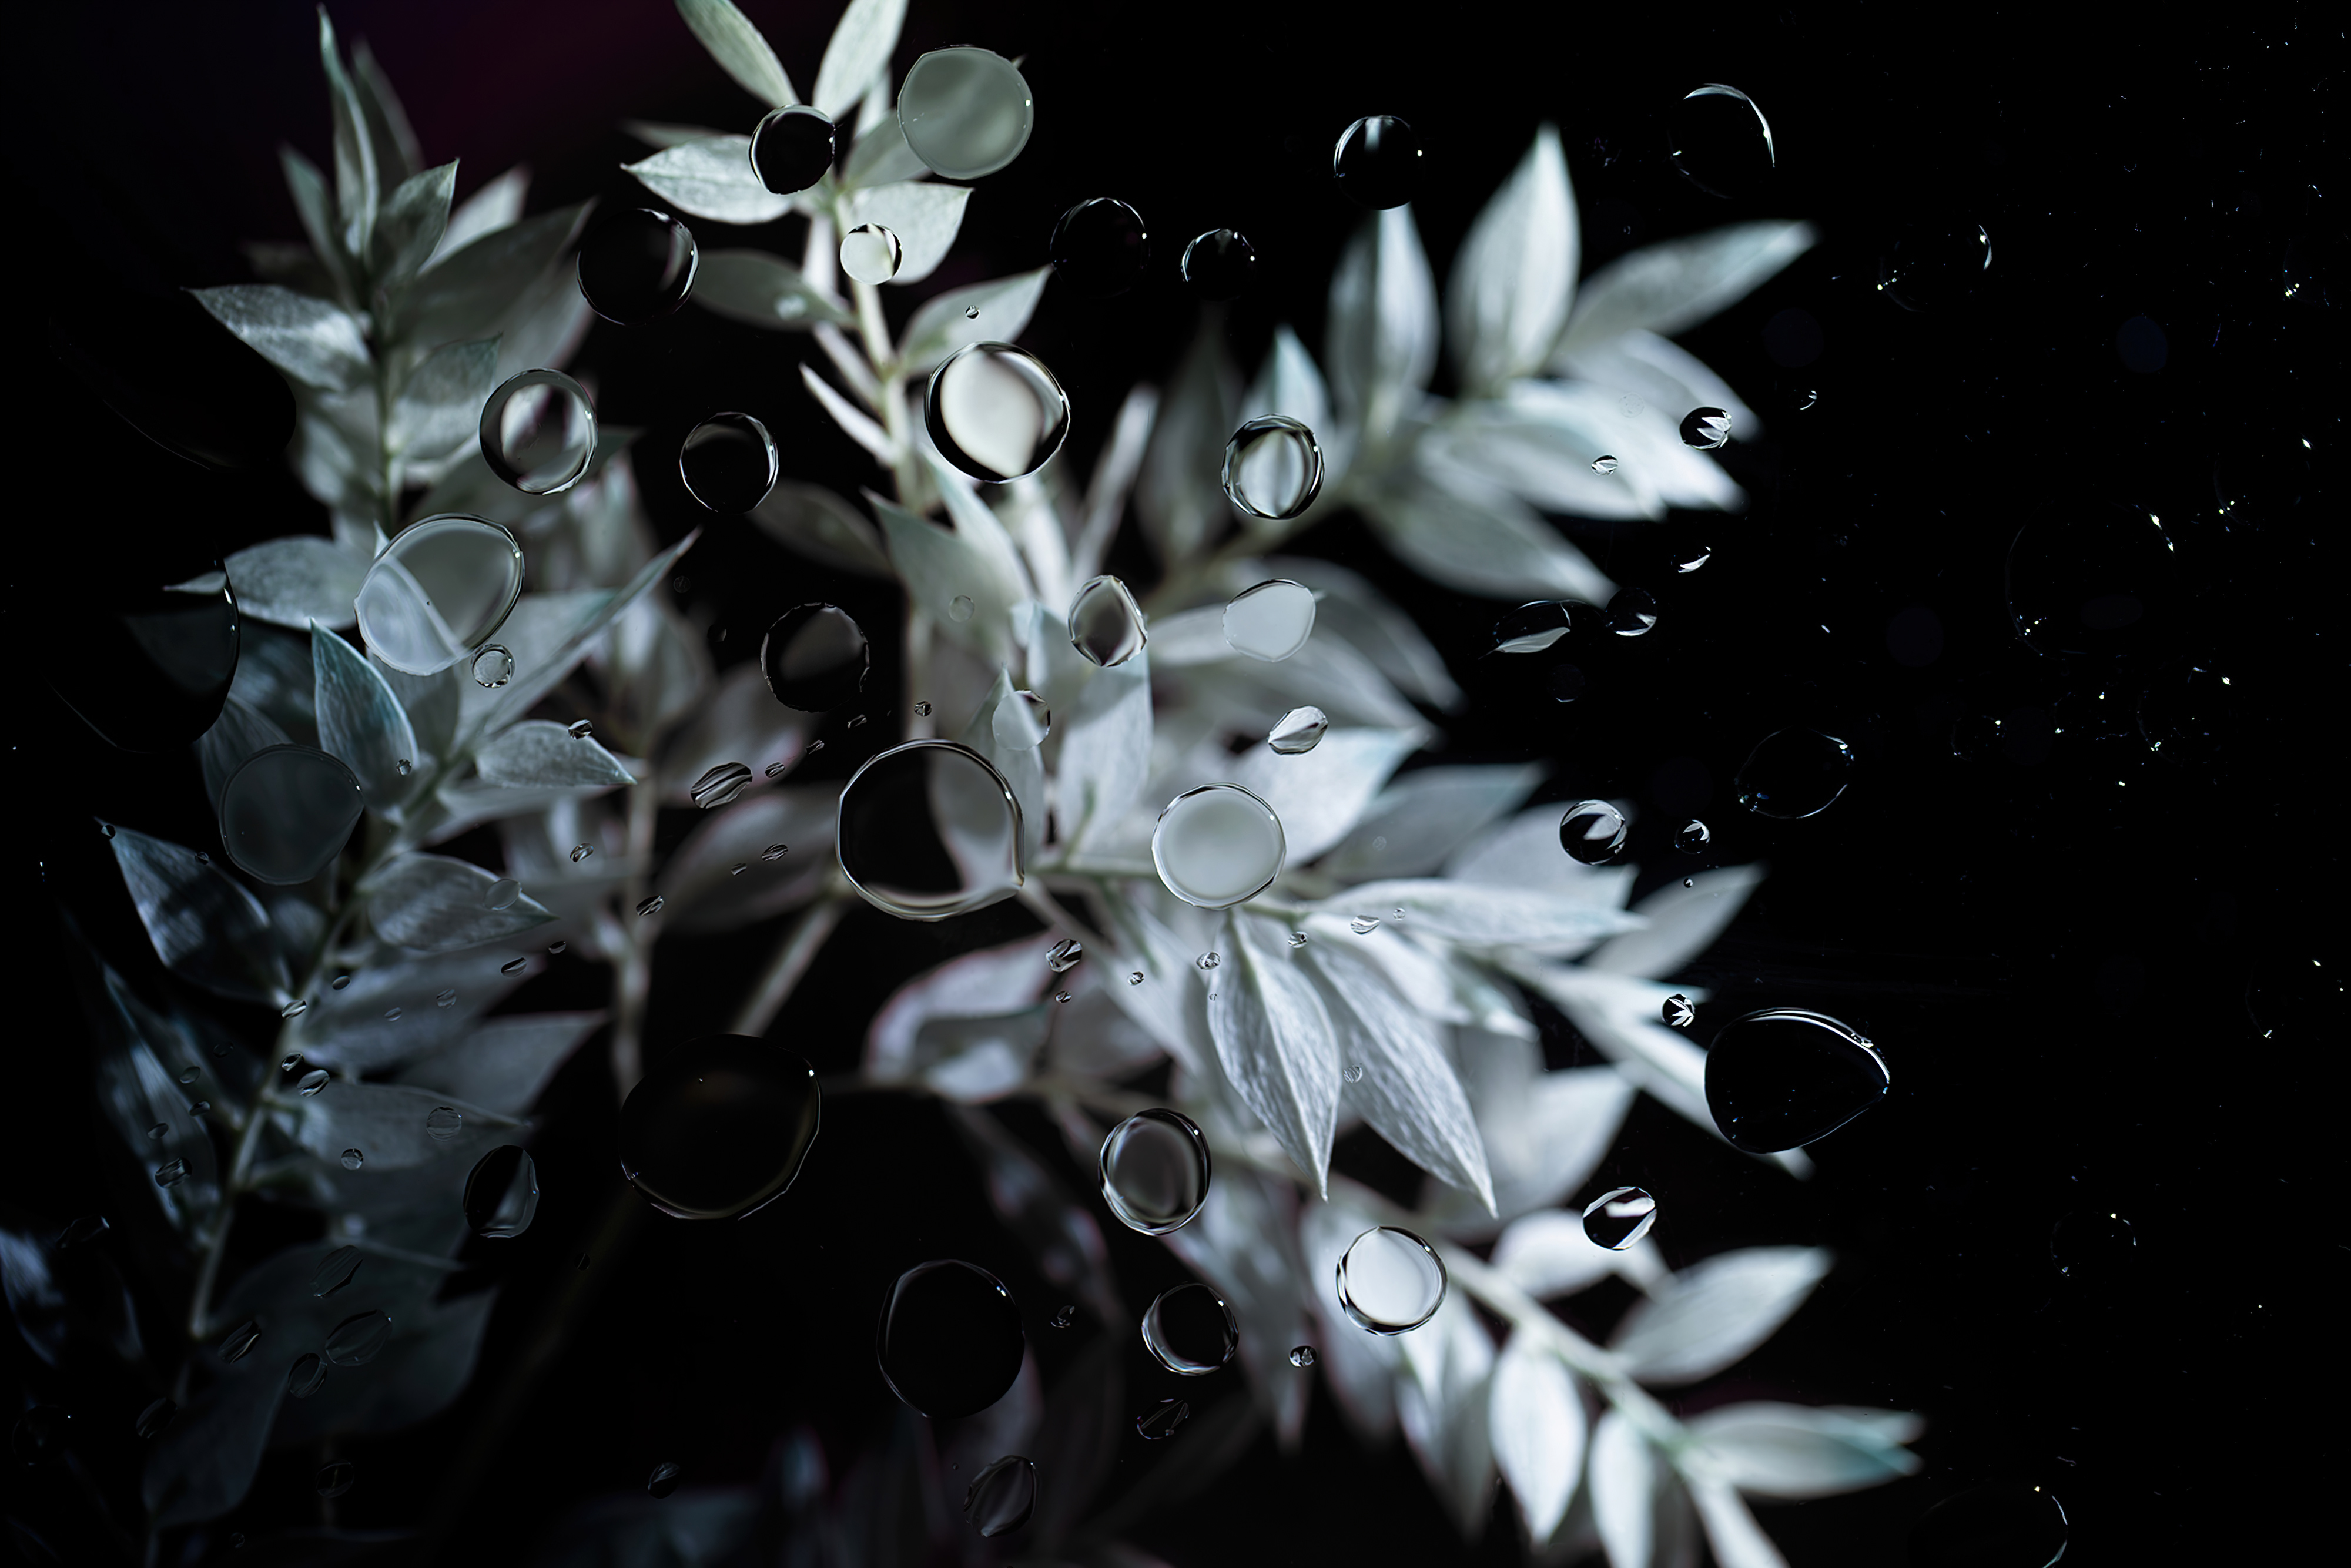 General 4000x2668 black background minimalism flower garden water drops flowers simple background nature closeup petals